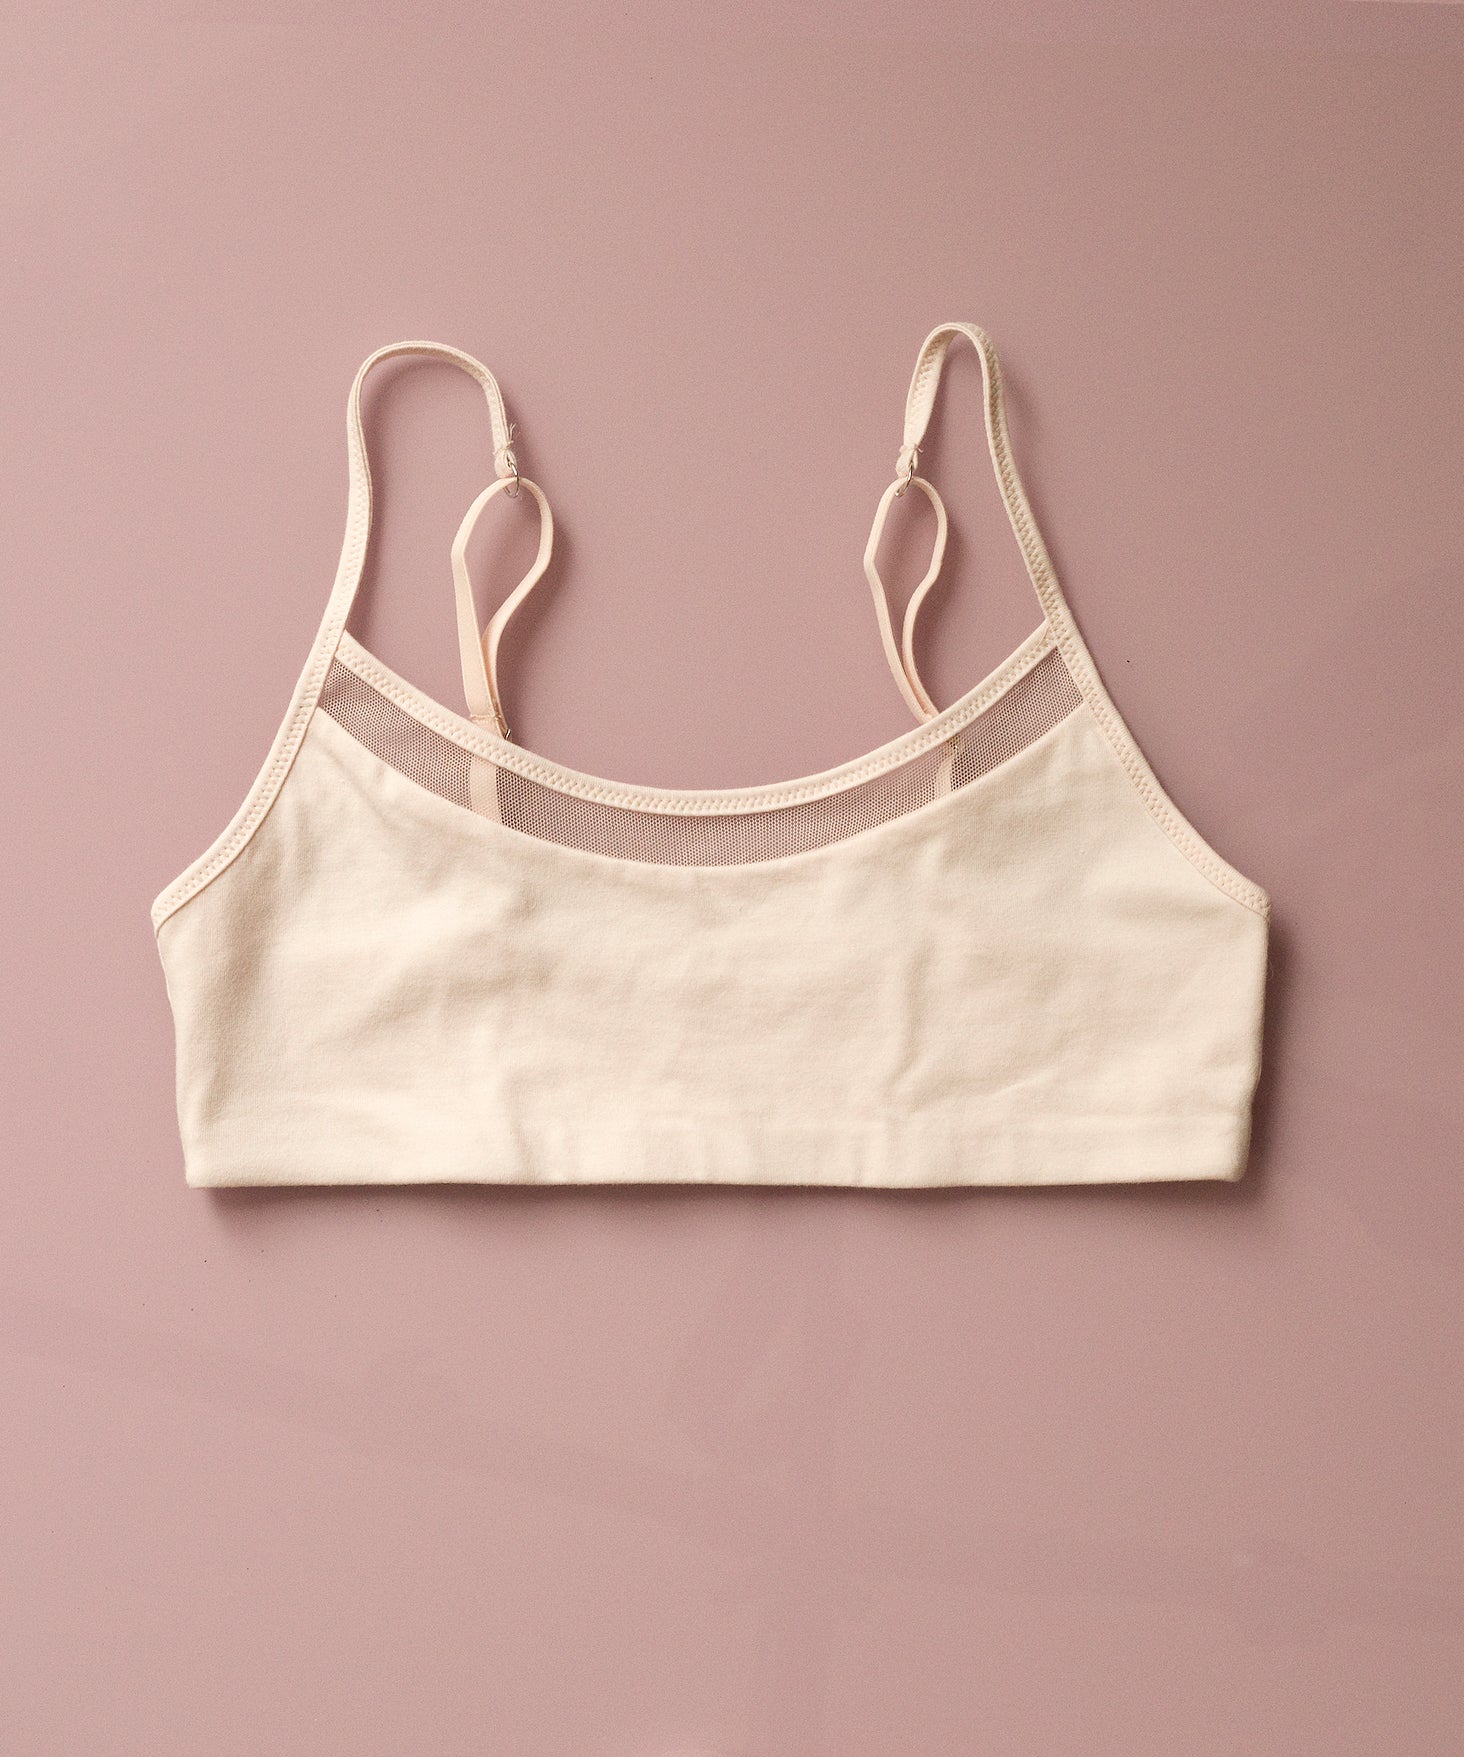 Boujo-hake-underwear-crop-top-organic-cotton-jersey-mesh-nude